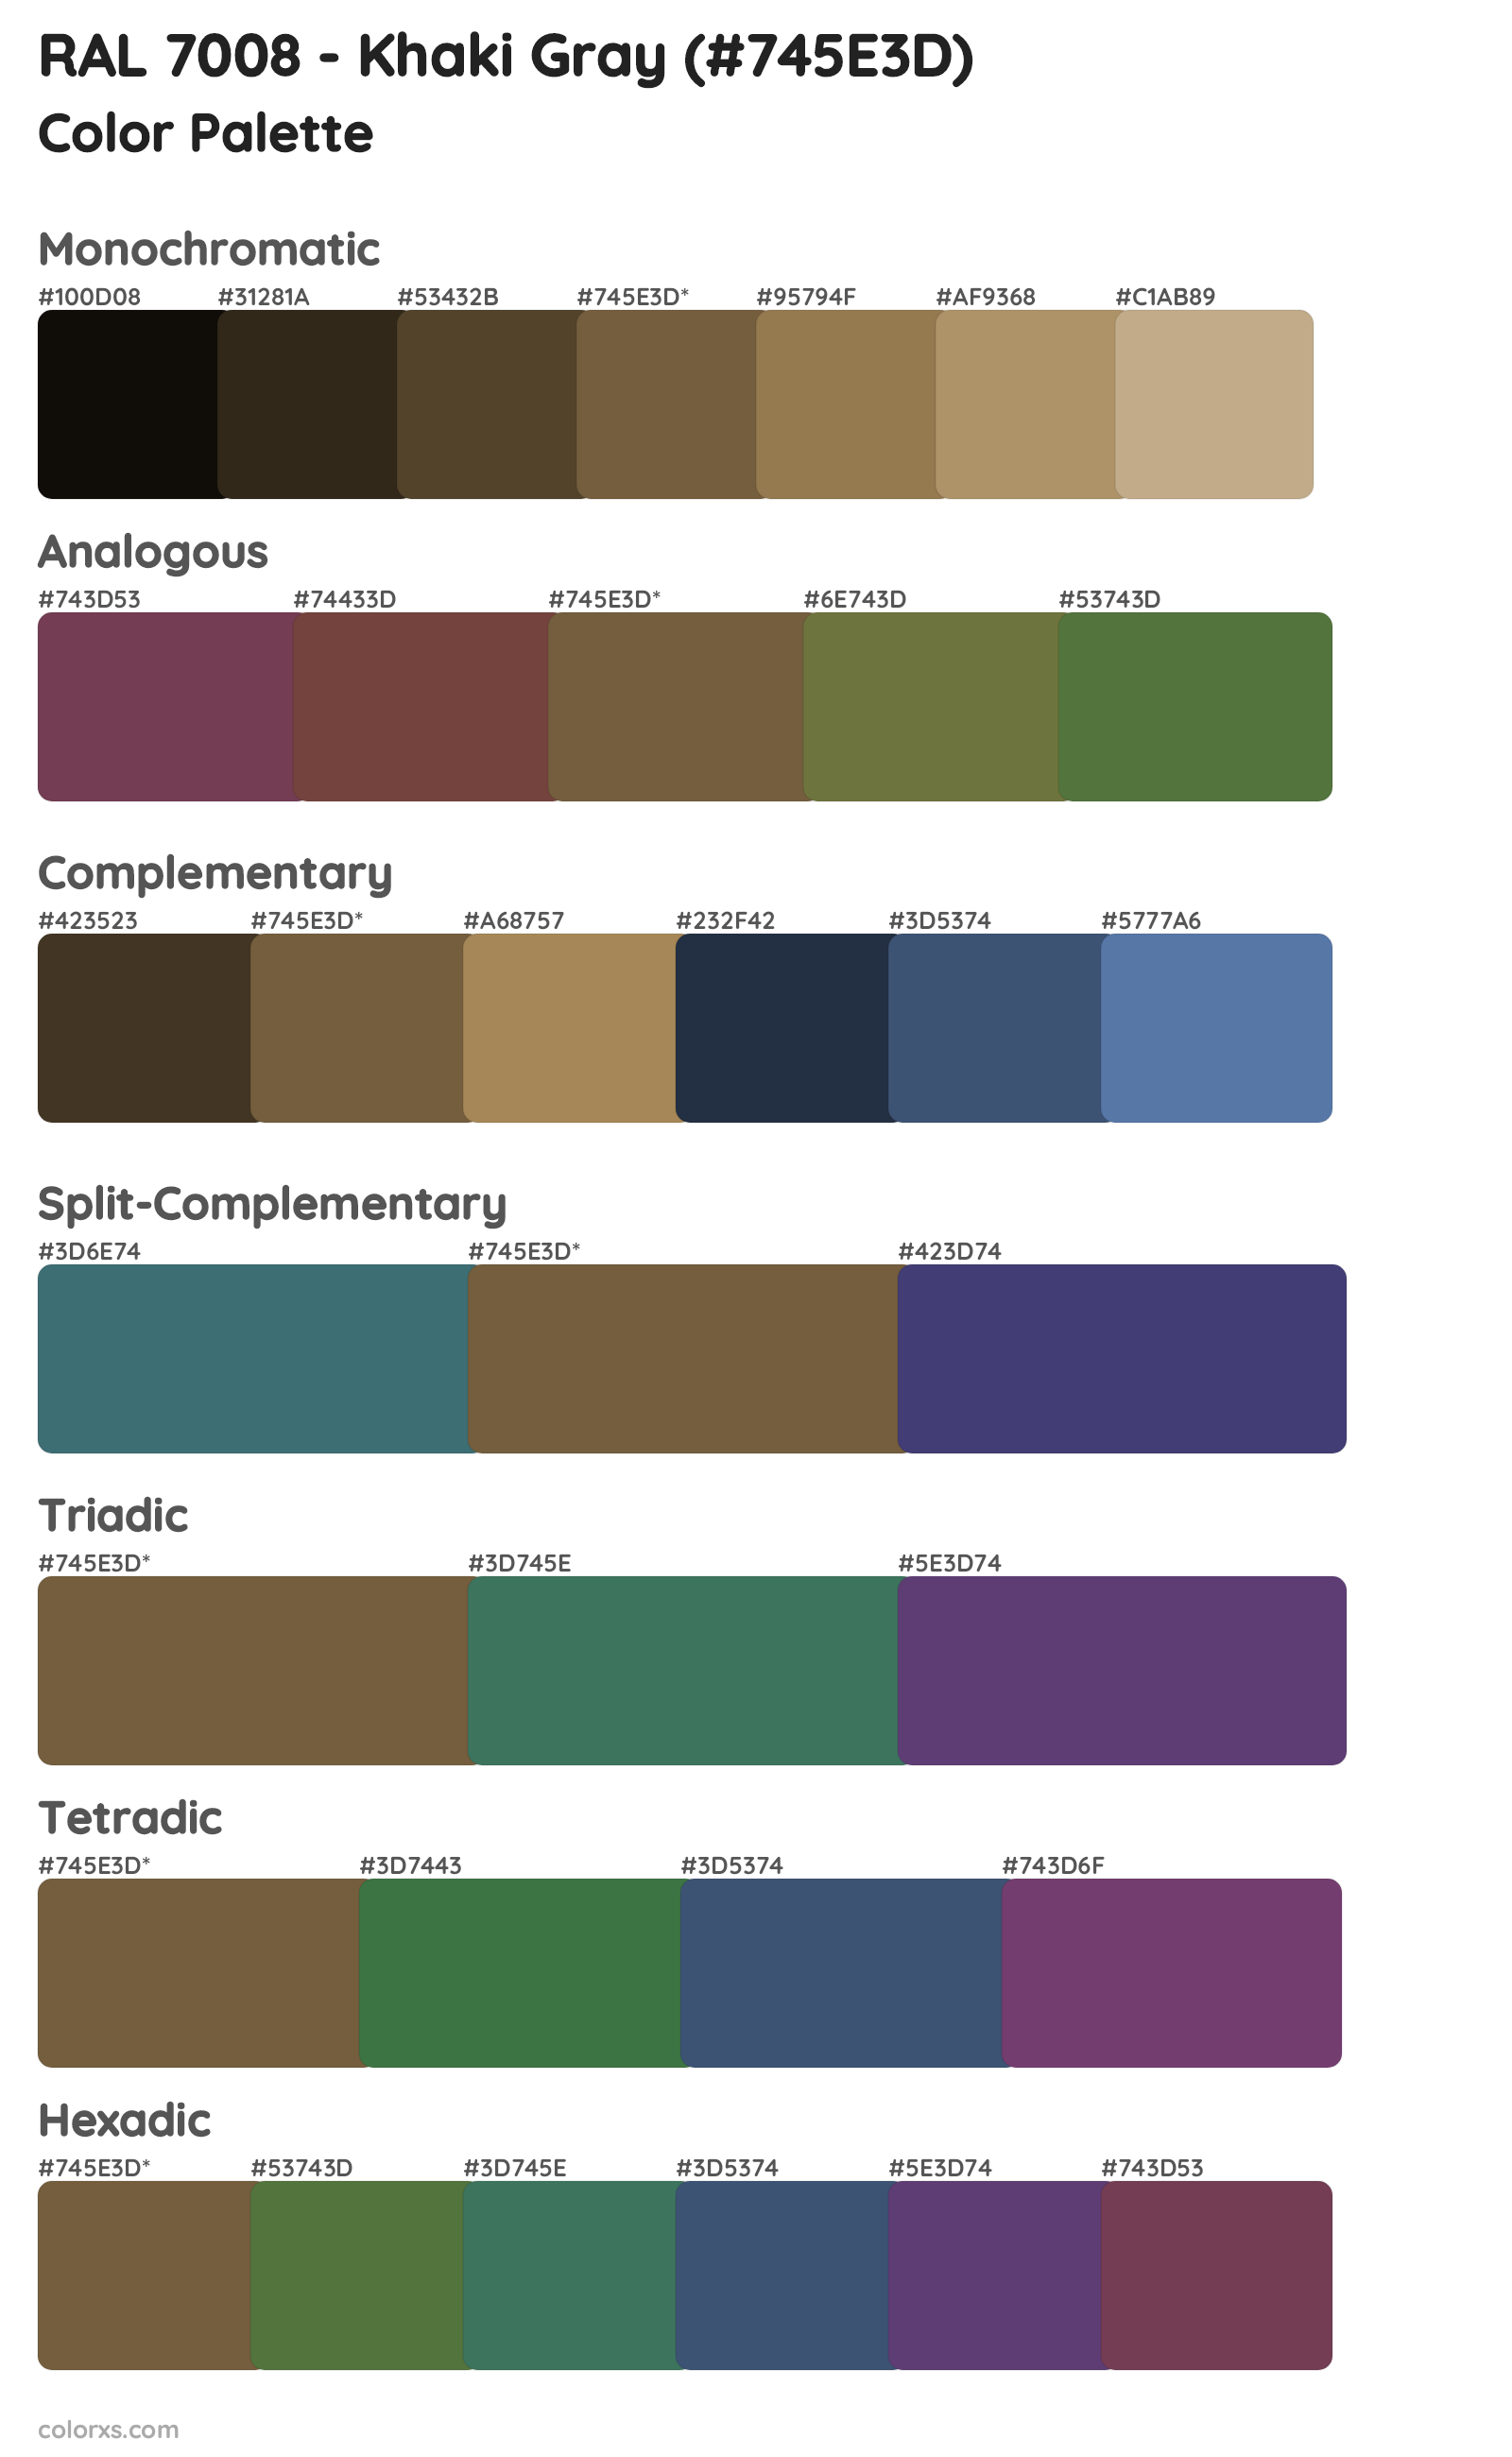 RAL 7008 - Khaki Gray Color Scheme Palettes